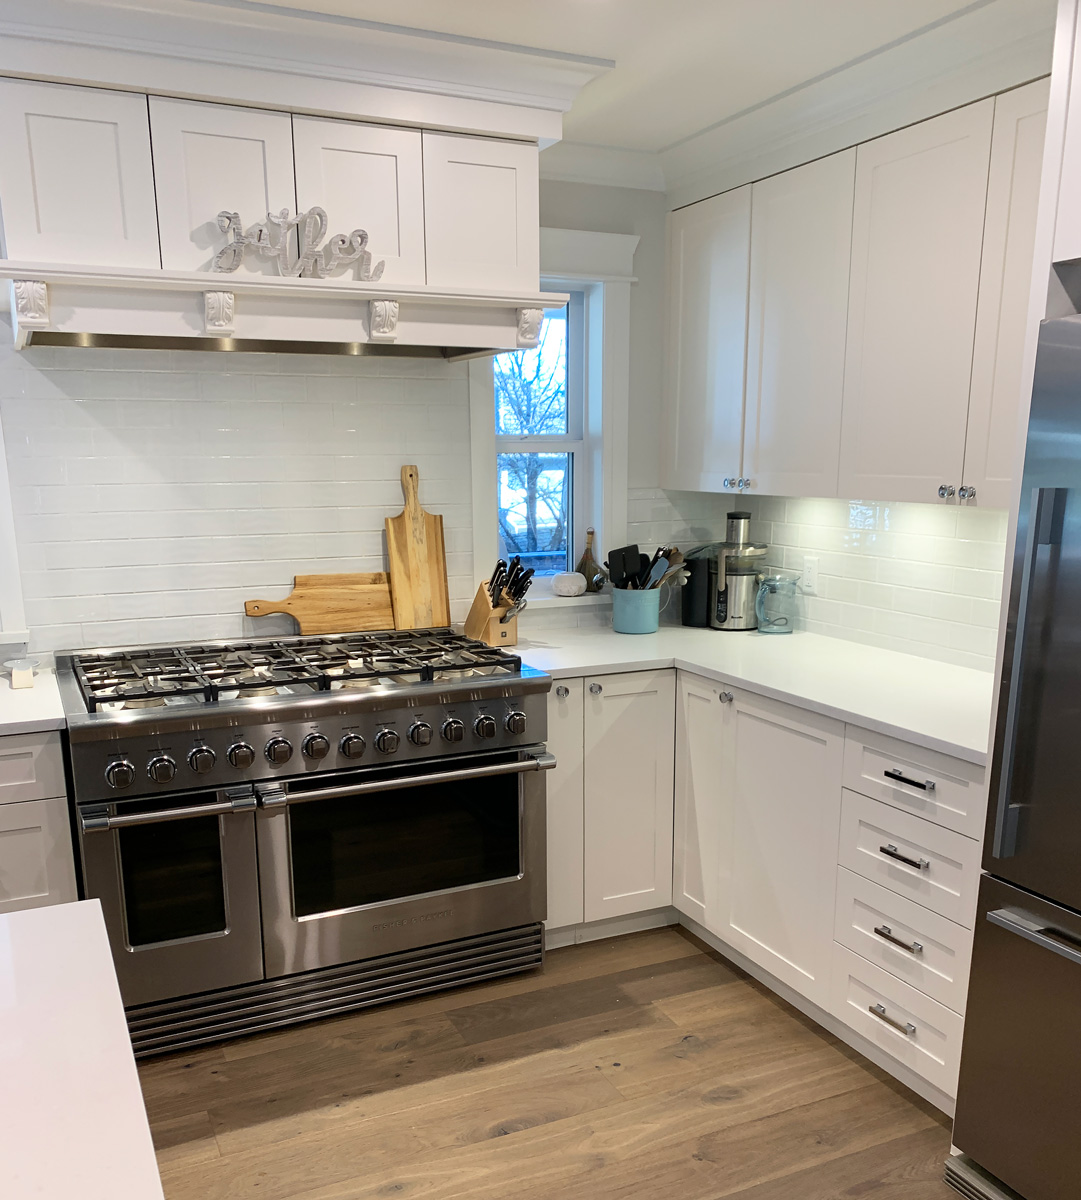 All-white farmhouse style kitchen with stainless steel appliances